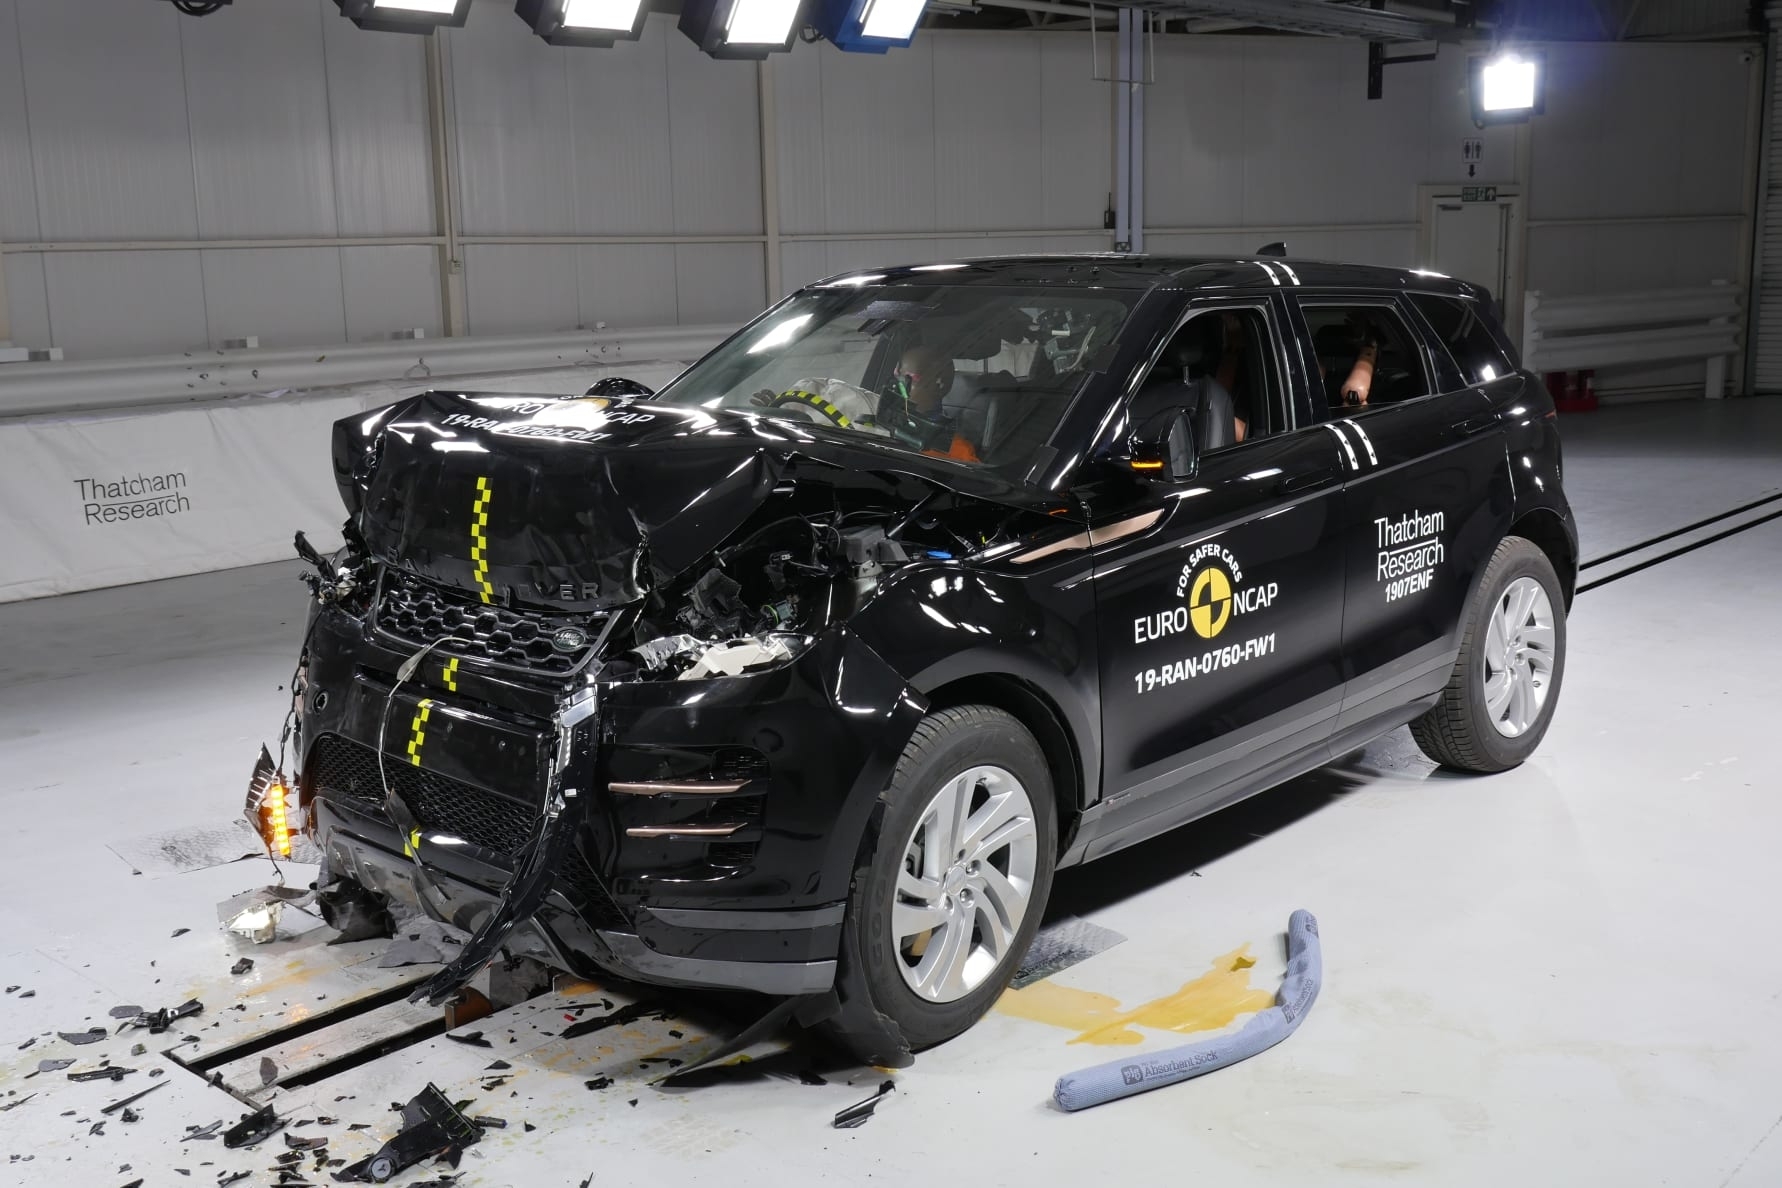 Range Rover Evoque Frontal full width test April 2019